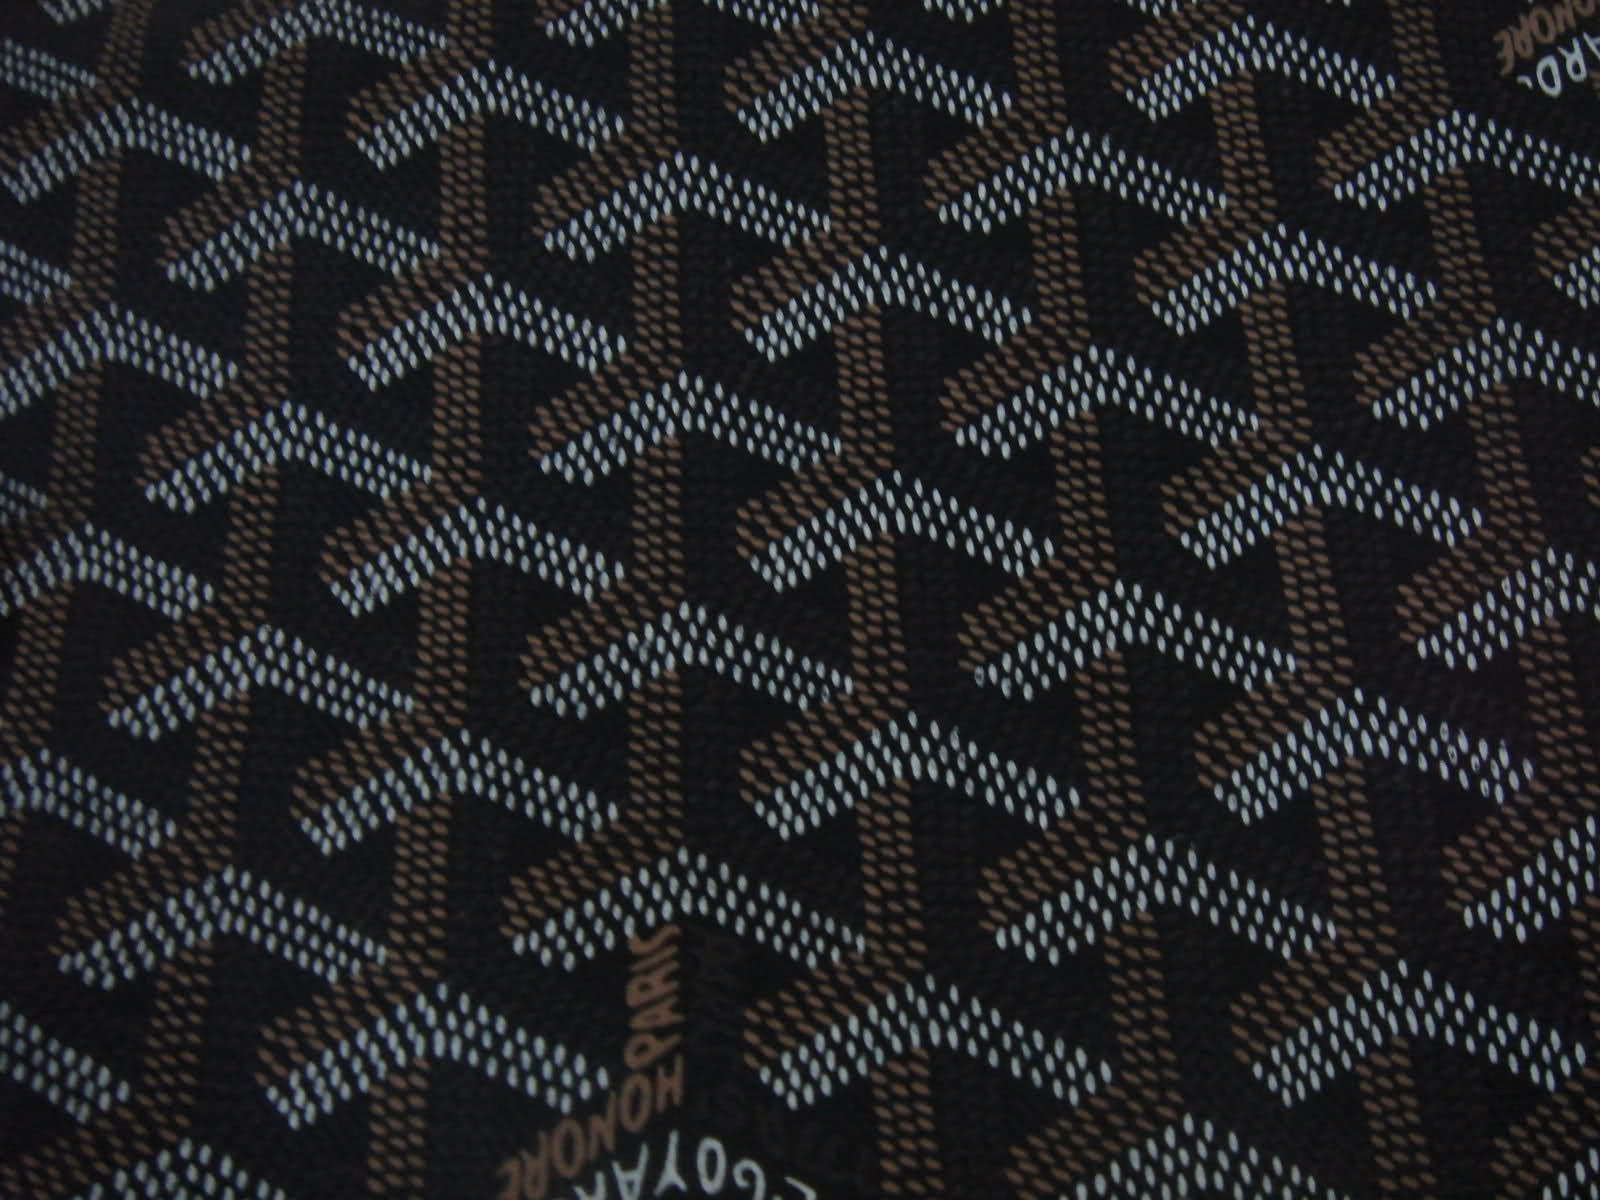 goyard iphone wallpaper,pattern,woven fabric,textile,design,weaving  (#365173) - WallpaperUse